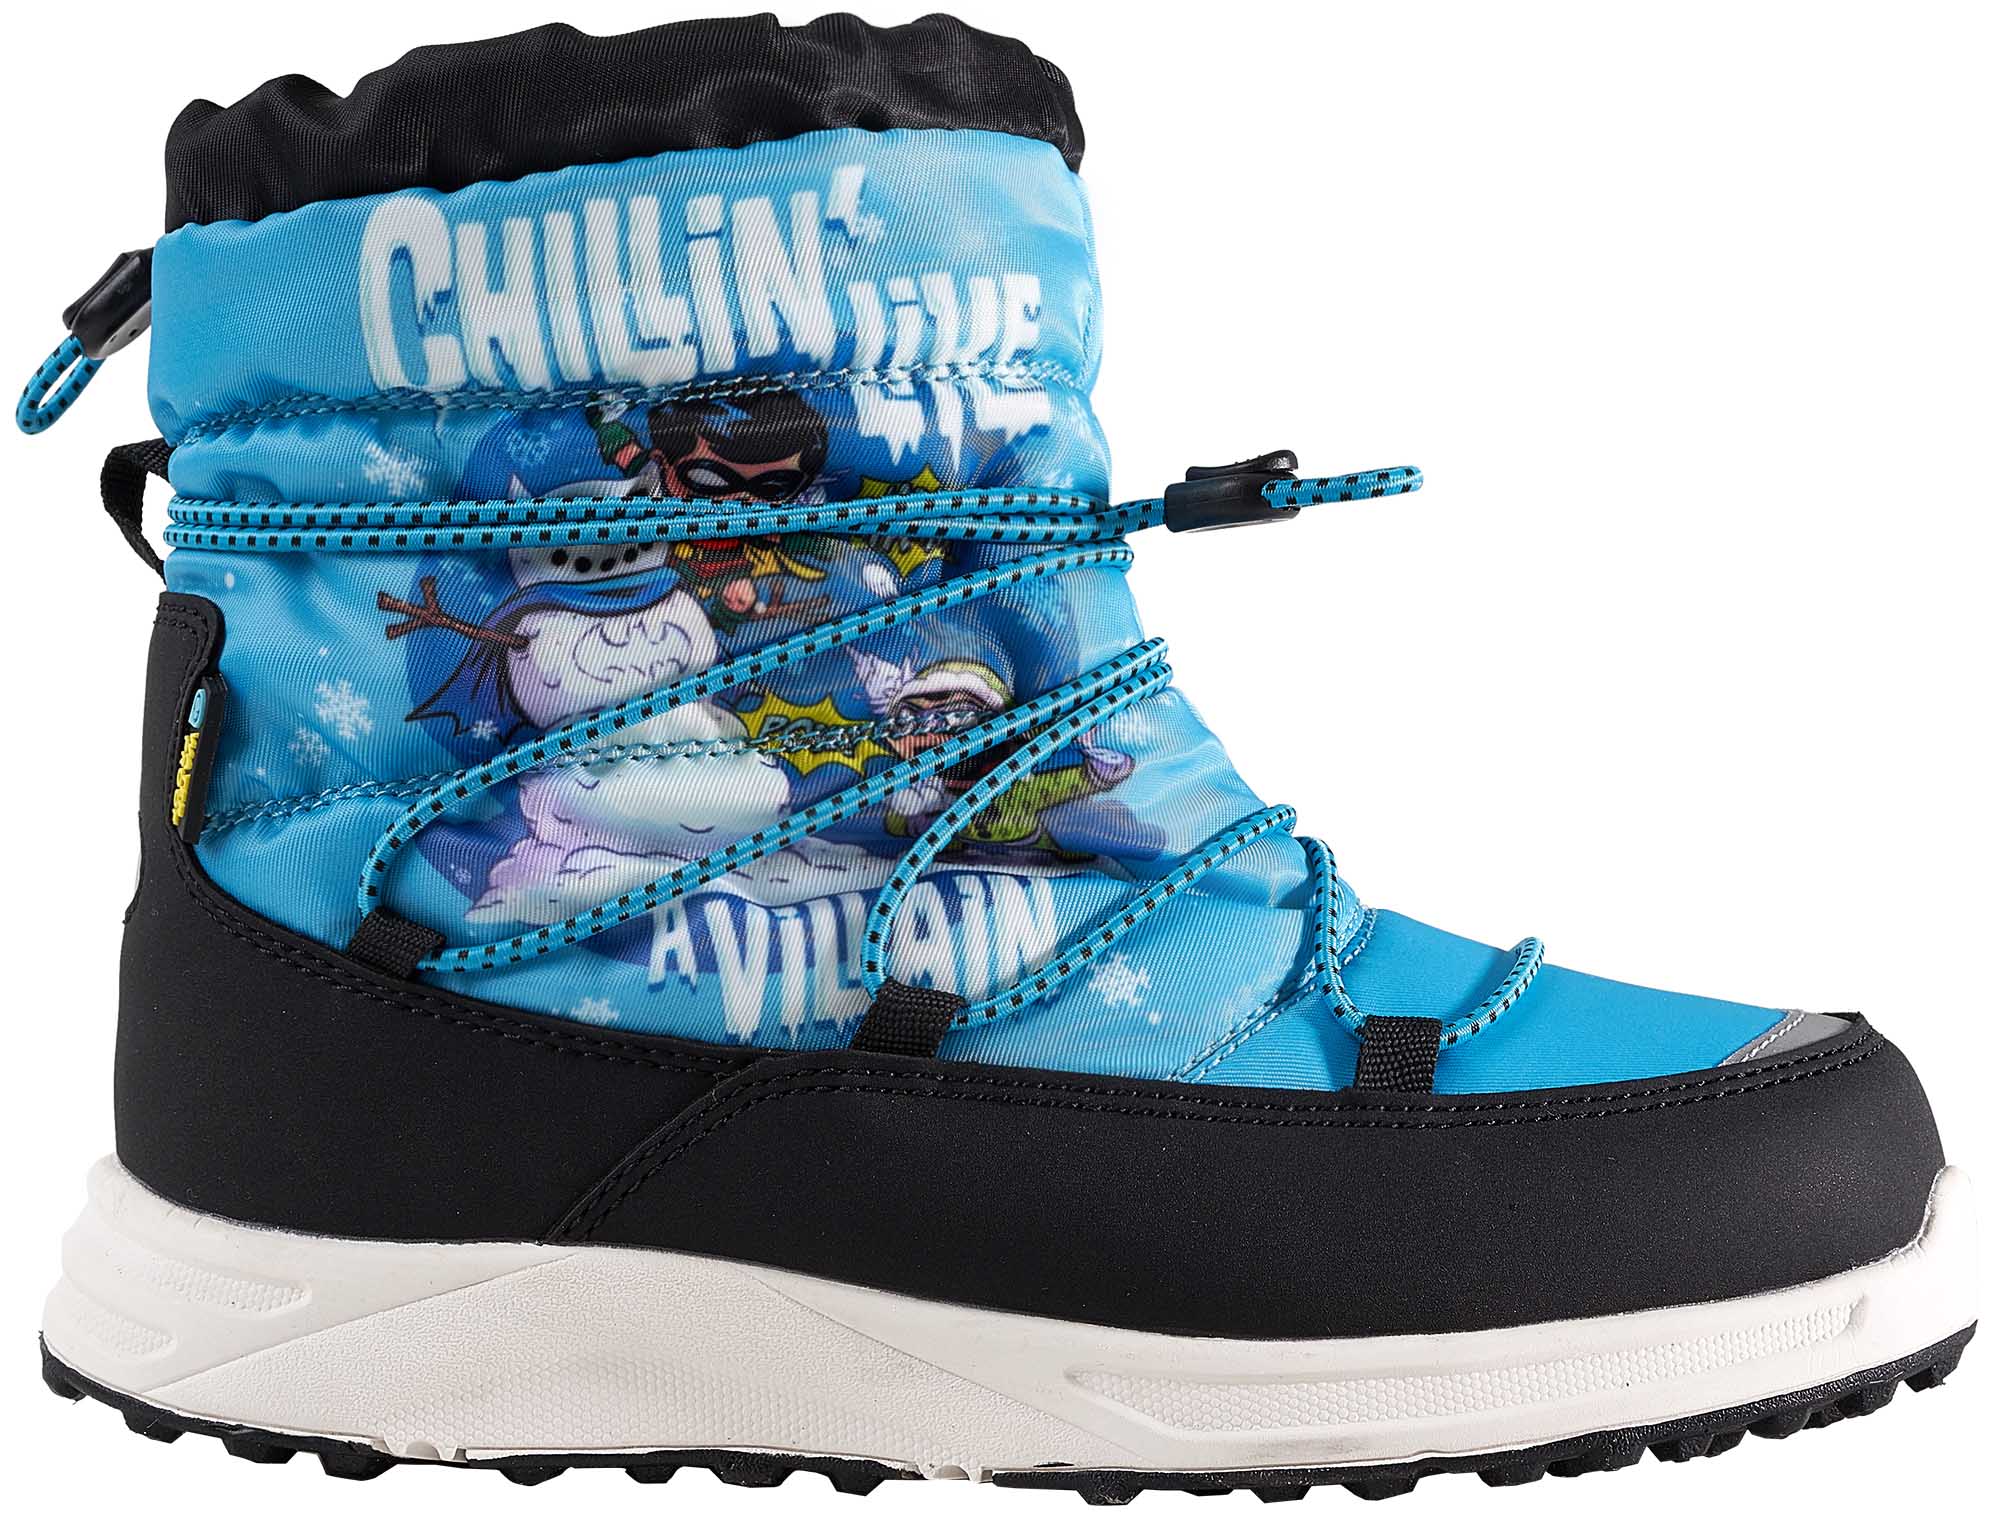 Children's winter shoes